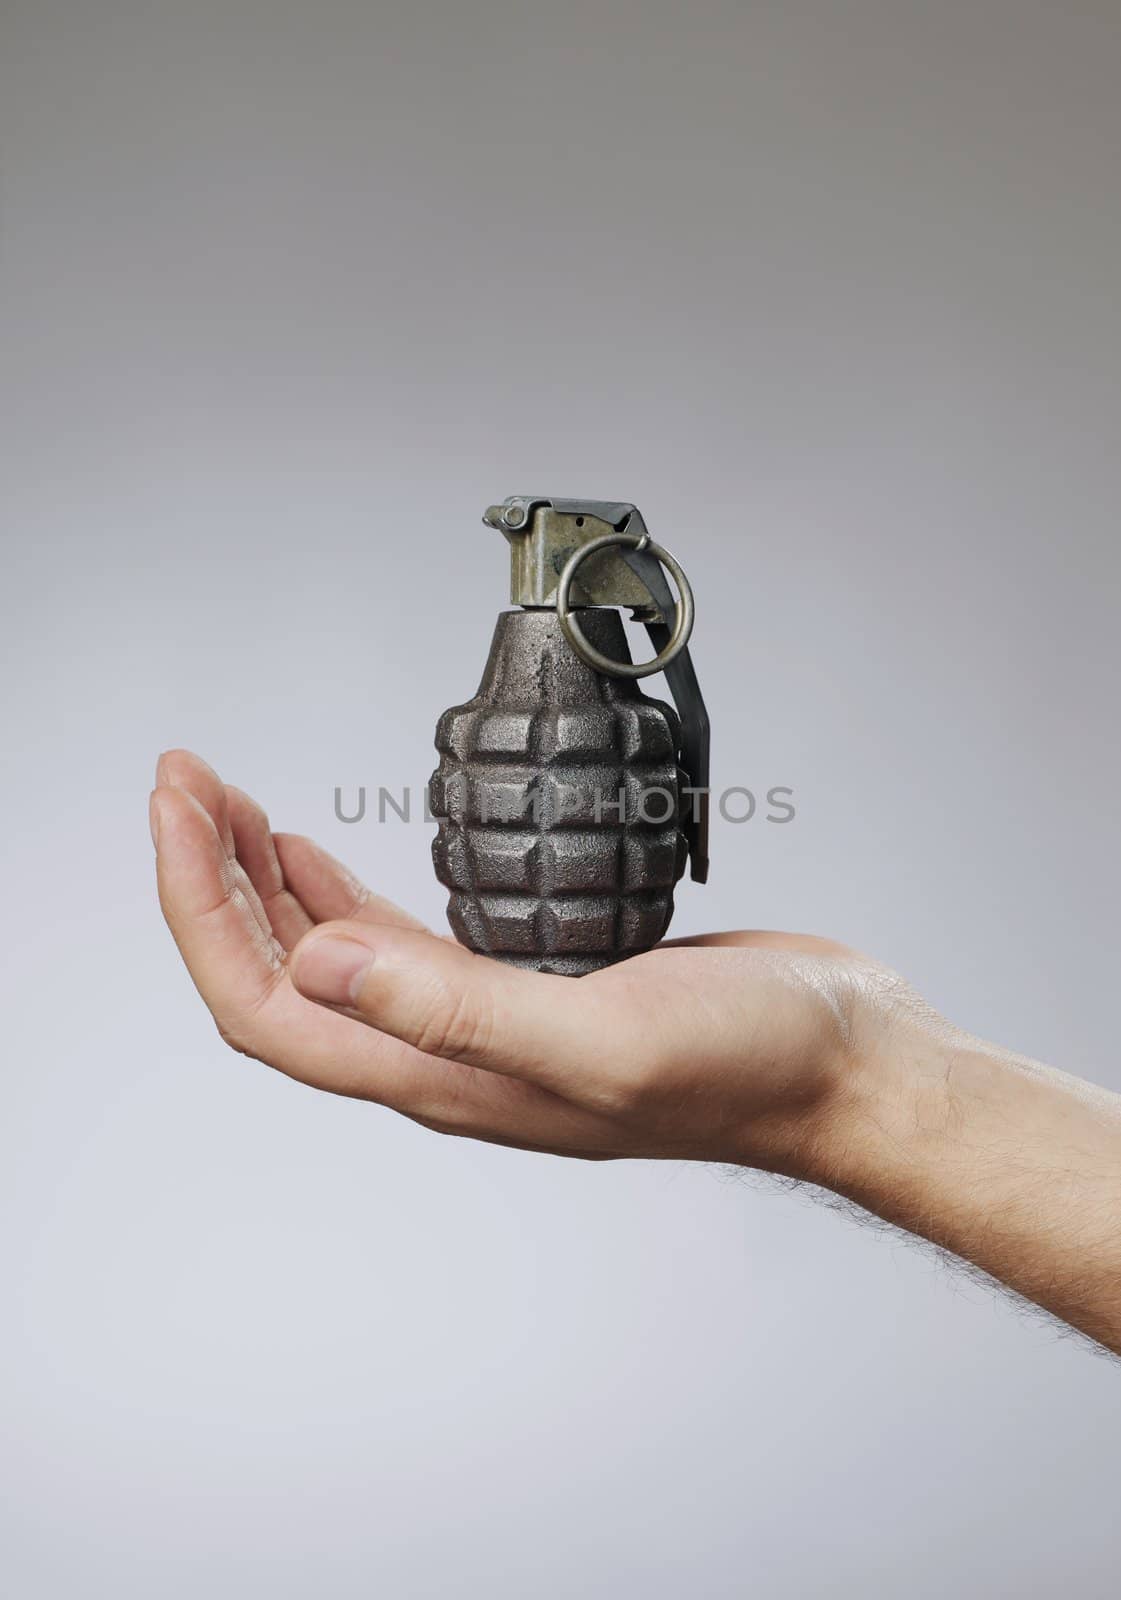 Hand grenade by Stocksnapper